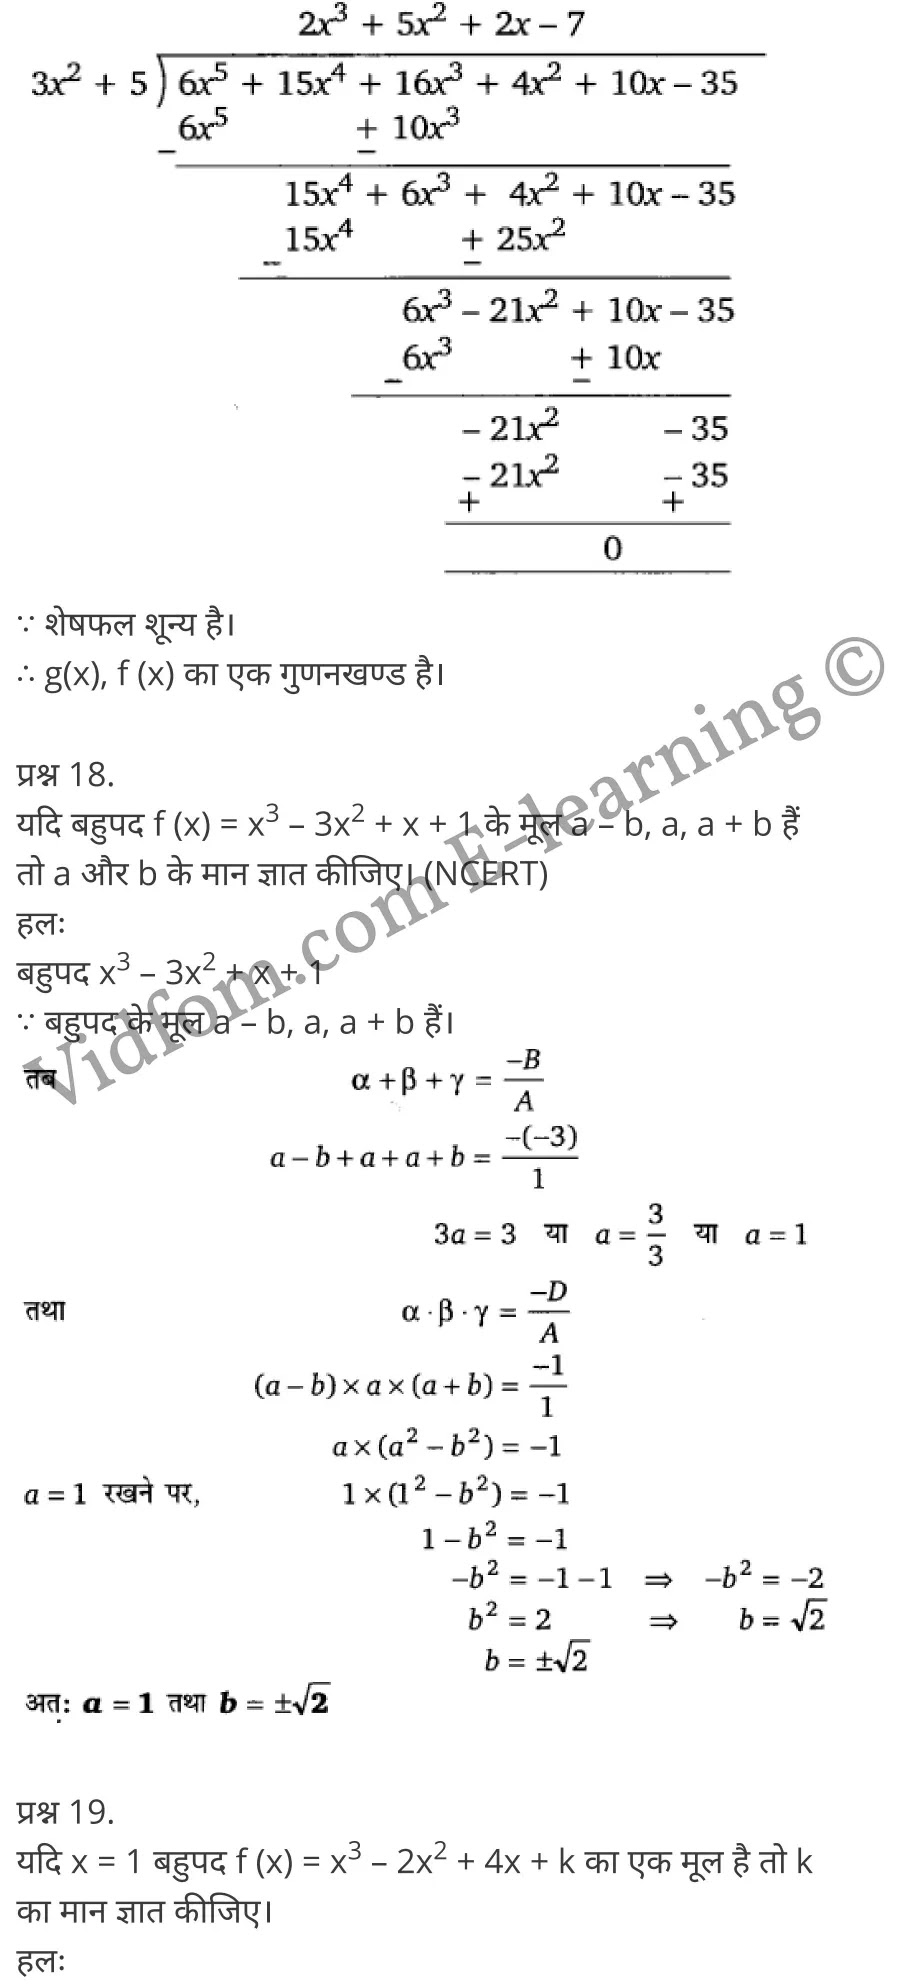 Class 10 Chapter 2 Polynomials (बहुपद),   Chapter 2 Polynomials Ex 2.1, Chapter 2 Polynomials Ex 2.2, कक्षा 10 बालाजी गणित  के नोट्स  हिंदी में एनसीईआरटी समाधान,     class 10 Balaji Maths Chapter 2,   class 10 Balaji Maths Chapter 2 ncert solutions in Hindi,   class 10 Balaji Maths Chapter 2 notes in hindi,   class 10 Balaji Maths Chapter 2 question answer,   class 10 Balaji Maths Chapter 2 notes,   class 10 Balaji Maths Chapter 2 class 10 Balaji Maths Chapter 2 in  hindi,    class 10 Balaji Maths Chapter 2 important questions in  hindi,   class 10 Balaji Maths Chapter 2 notes in hindi,    class 10 Balaji Maths Chapter 2 test,   class 10 Balaji Maths Chapter 2 pdf,   class 10 Balaji Maths Chapter 2 notes pdf,   class 10 Balaji Maths Chapter 2 exercise solutions,   class 10 Balaji Maths Chapter 2 notes study rankers,   class 10 Balaji Maths Chapter 2 notes,    class 10 Balaji Maths Chapter 2  class 10  notes pdf,   class 10 Balaji Maths Chapter 2 class 10  notes  ncert,   class 10 Balaji Maths Chapter 2 class 10 pdf,   class 10 Balaji Maths Chapter 2  book,   class 10 Balaji Maths Chapter 2 quiz class 10  ,    10  th class 10 Balaji Maths Chapter 2  book up board,   up board 10  th class 10 Balaji Maths Chapter 2 notes,  class 10 Balaji Maths,   class 10 Balaji Maths ncert solutions in Hindi,   class 10 Balaji Maths notes in hindi,   class 10 Balaji Maths question answer,   class 10 Balaji Maths notes,  class 10 Balaji Maths class 10 Balaji Maths Chapter 2 in  hindi,    class 10 Balaji Maths important questions in  hindi,   class 10 Balaji Maths notes in hindi,    class 10 Balaji Maths test,  class 10 Balaji Maths class 10 Balaji Maths Chapter 2 pdf,   class 10 Balaji Maths notes pdf,   class 10 Balaji Maths exercise solutions,   class 10 Balaji Maths,  class 10 Balaji Maths notes study rankers,   class 10 Balaji Maths notes,  class 10 Balaji Maths notes,   class 10 Balaji Maths  class 10  notes pdf,   class 10 Balaji Maths class 10  notes  ncert,   class 10 Balaji Maths class 10 pdf,   class 10 Balaji Maths  book,  class 10 Balaji Maths quiz class 10  ,  10  th class 10 Balaji Maths    book up board,    up board 10  th class 10 Balaji Maths notes,      कक्षा 10 बालाजी गणित अध्याय 2 ,  कक्षा 10 बालाजी गणित, कक्षा 10 बालाजी गणित अध्याय 2  के नोट्स हिंदी में,  कक्षा 10 का हिंदी अध्याय 2 का प्रश्न उत्तर,  कक्षा 10 बालाजी गणित अध्याय 2  के नोट्स,  10 कक्षा बालाजी गणित  हिंदी में, कक्षा 10 बालाजी गणित अध्याय 2  हिंदी में,  कक्षा 10 बालाजी गणित अध्याय 2  महत्वपूर्ण प्रश्न हिंदी में, कक्षा 10   हिंदी के नोट्स  हिंदी में, बालाजी गणित हिंदी में  कक्षा 10 नोट्स pdf,    बालाजी गणित हिंदी में  कक्षा 10 नोट्स 2021 ncert,   बालाजी गणित हिंदी  कक्षा 10 pdf,   बालाजी गणित हिंदी में  पुस्तक,   बालाजी गणित हिंदी में की बुक,   बालाजी गणित हिंदी में  प्रश्नोत्तरी class 10 ,  बिहार बोर्ड 10  पुस्तक वीं हिंदी नोट्स,    बालाजी गणित कक्षा 10 नोट्स 2021 ncert,   बालाजी गणित  कक्षा 10 pdf,   बालाजी गणित  पुस्तक,   बालाजी गणित  प्रश्नोत्तरी class 10, कक्षा 10 बालाजी गणित,  कक्षा 10 बालाजी गणित  के नोट्स हिंदी में,  कक्षा 10 का हिंदी का प्रश्न उत्तर,  कक्षा 10 बालाजी गणित  के नोट्स,  10 कक्षा हिंदी 2021  हिंदी में, कक्षा 10 बालाजी गणित  हिंदी में,  कक्षा 10 बालाजी गणित  महत्वपूर्ण प्रश्न हिंदी में, कक्षा 10 बालाजी गणित  नोट्स  हिंदी में,